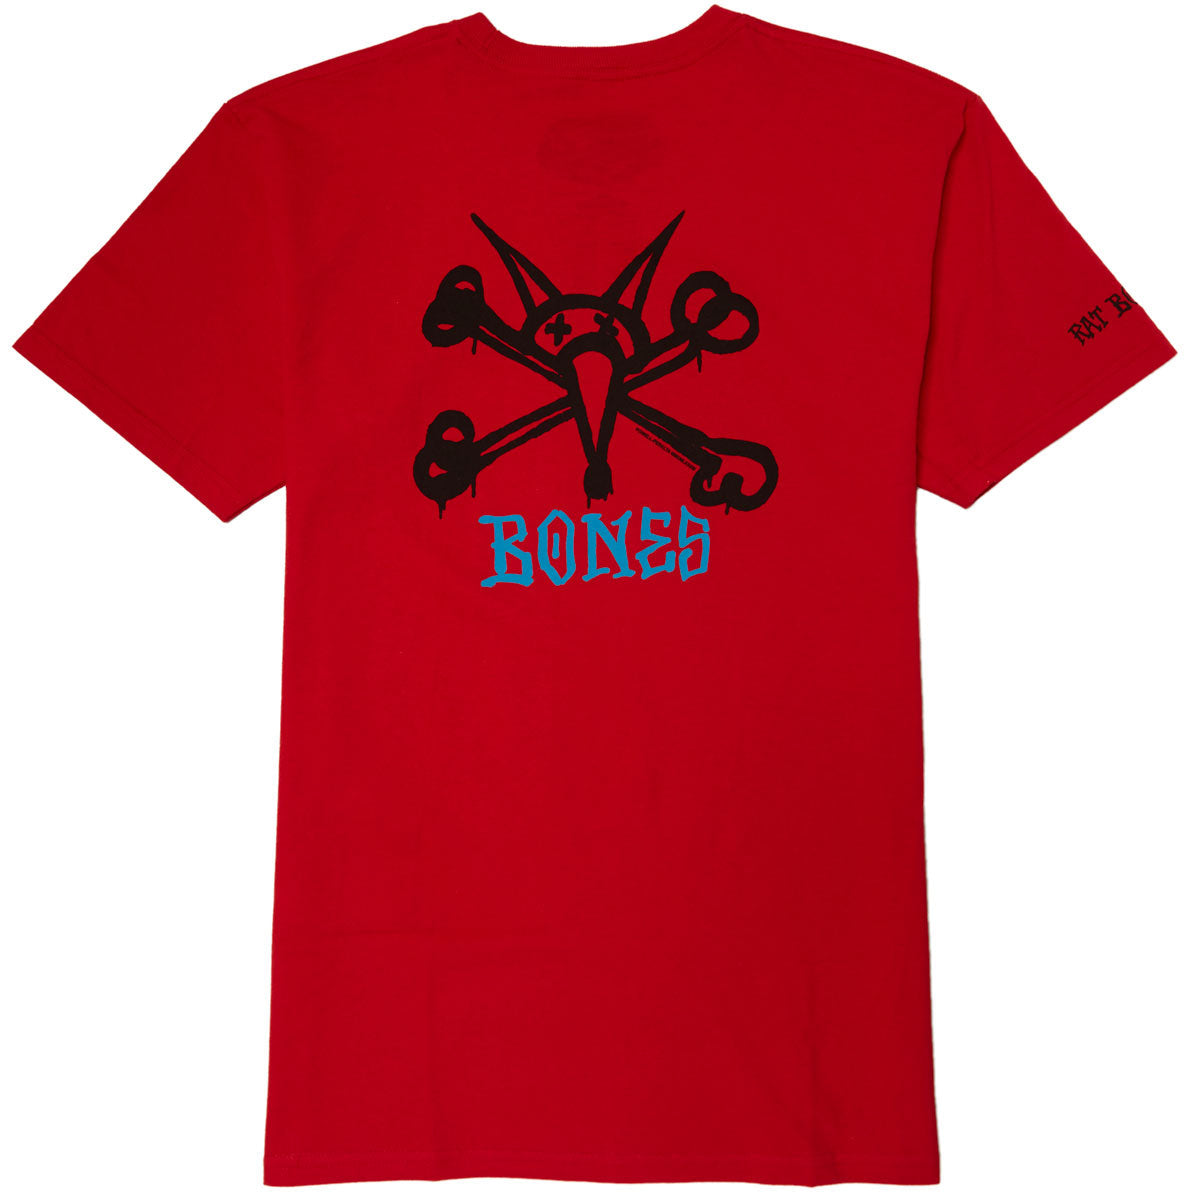 Powell-Peralta Rat Bones T-Shirt - Red image 1